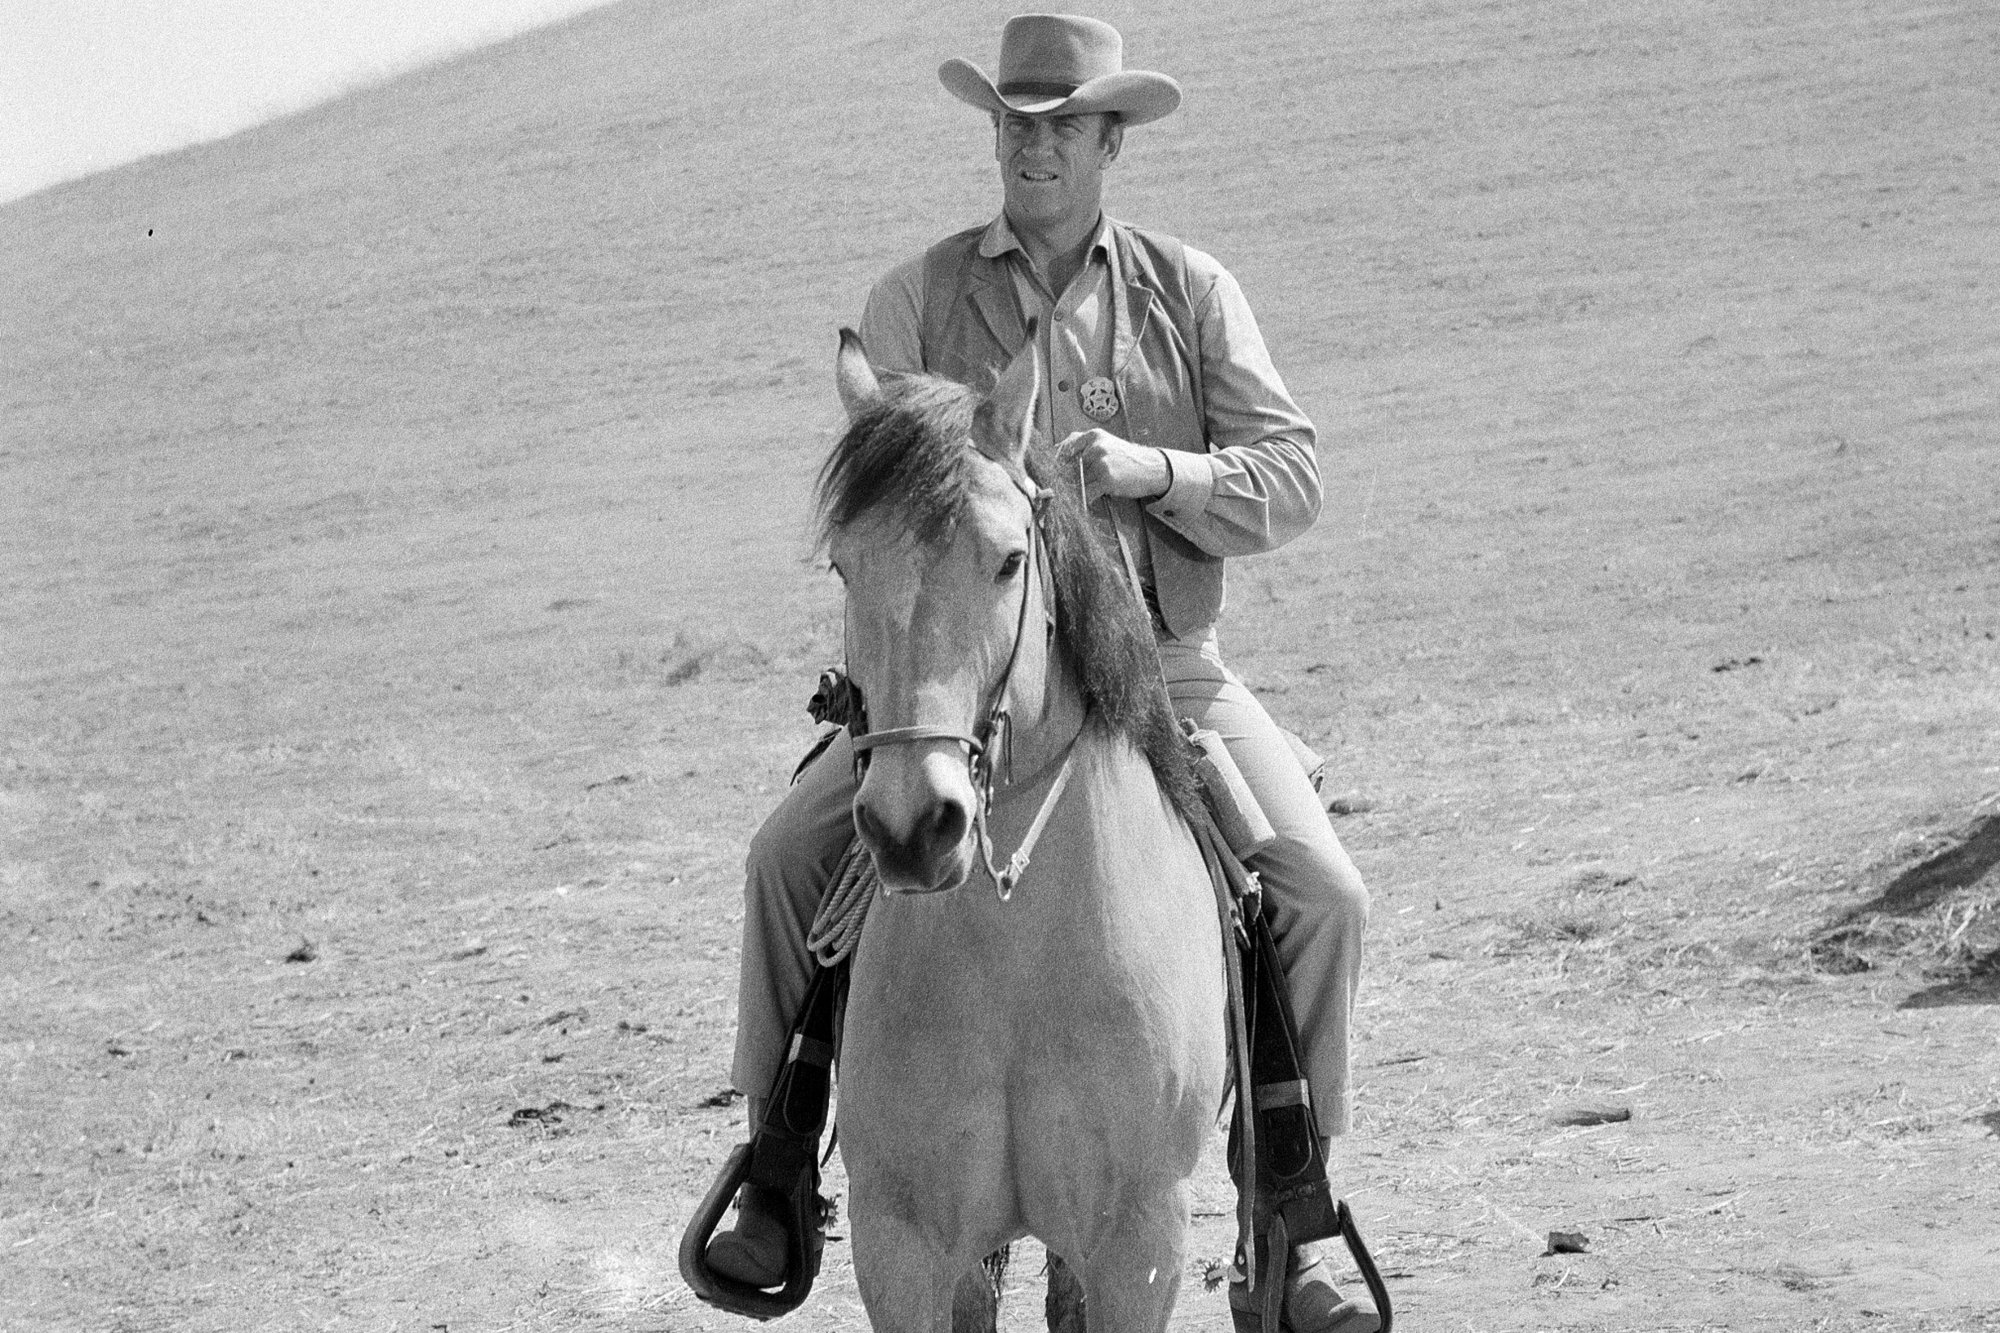 'Gunsmoke' James Arness as Matt Dillon riding a horse in a black-and-white picture